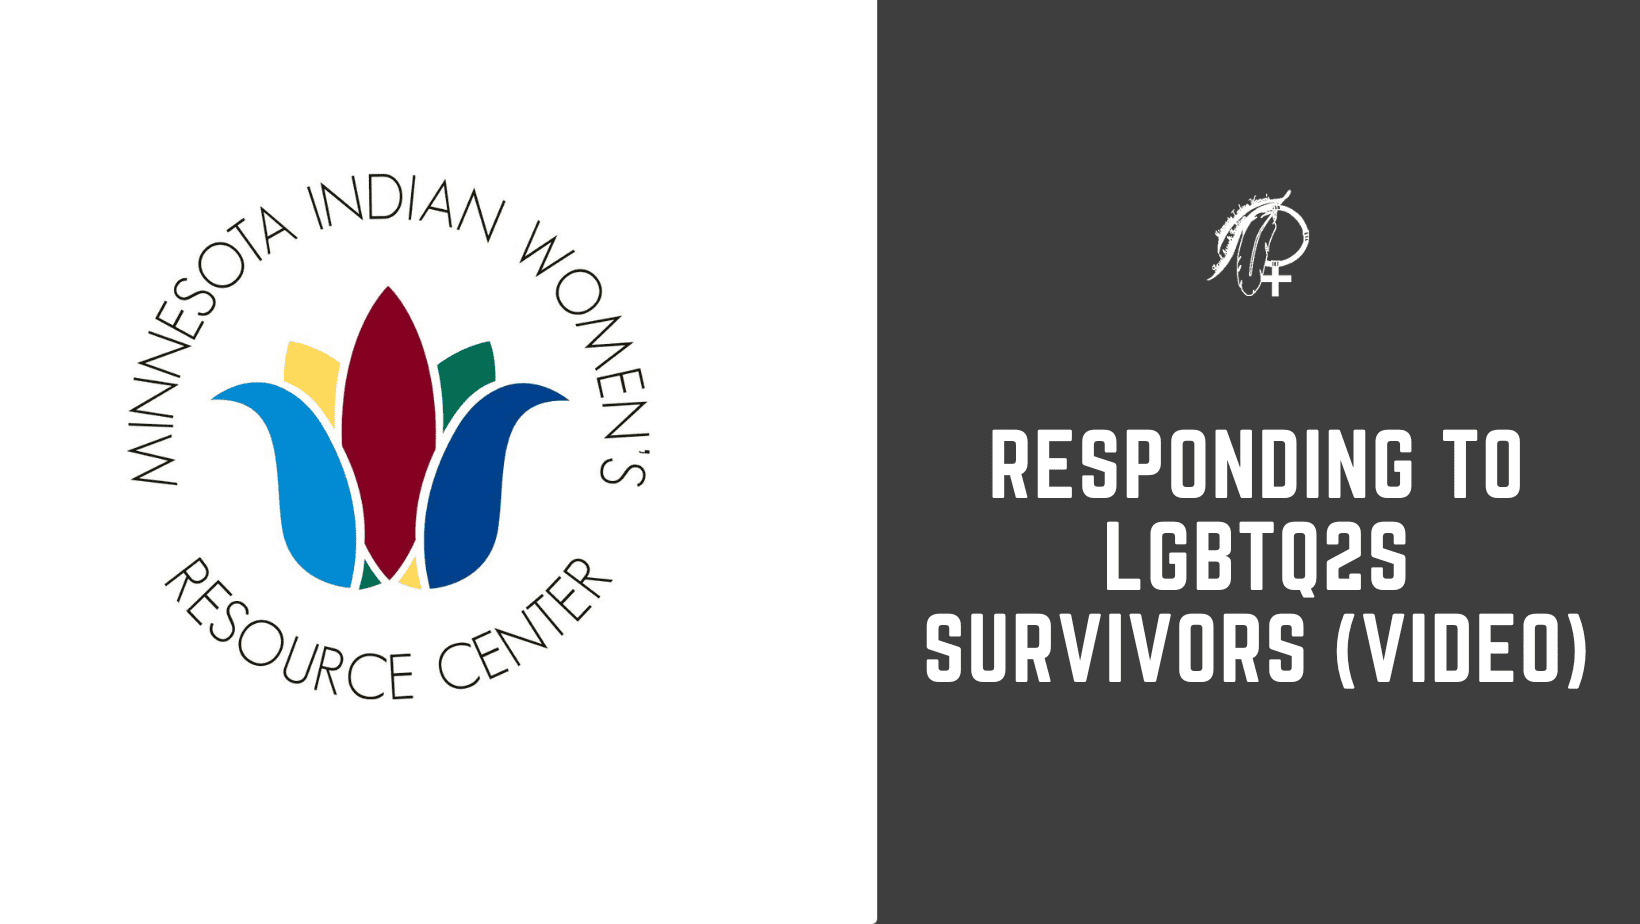 Responding to LGBTQ2S Survivors (video)